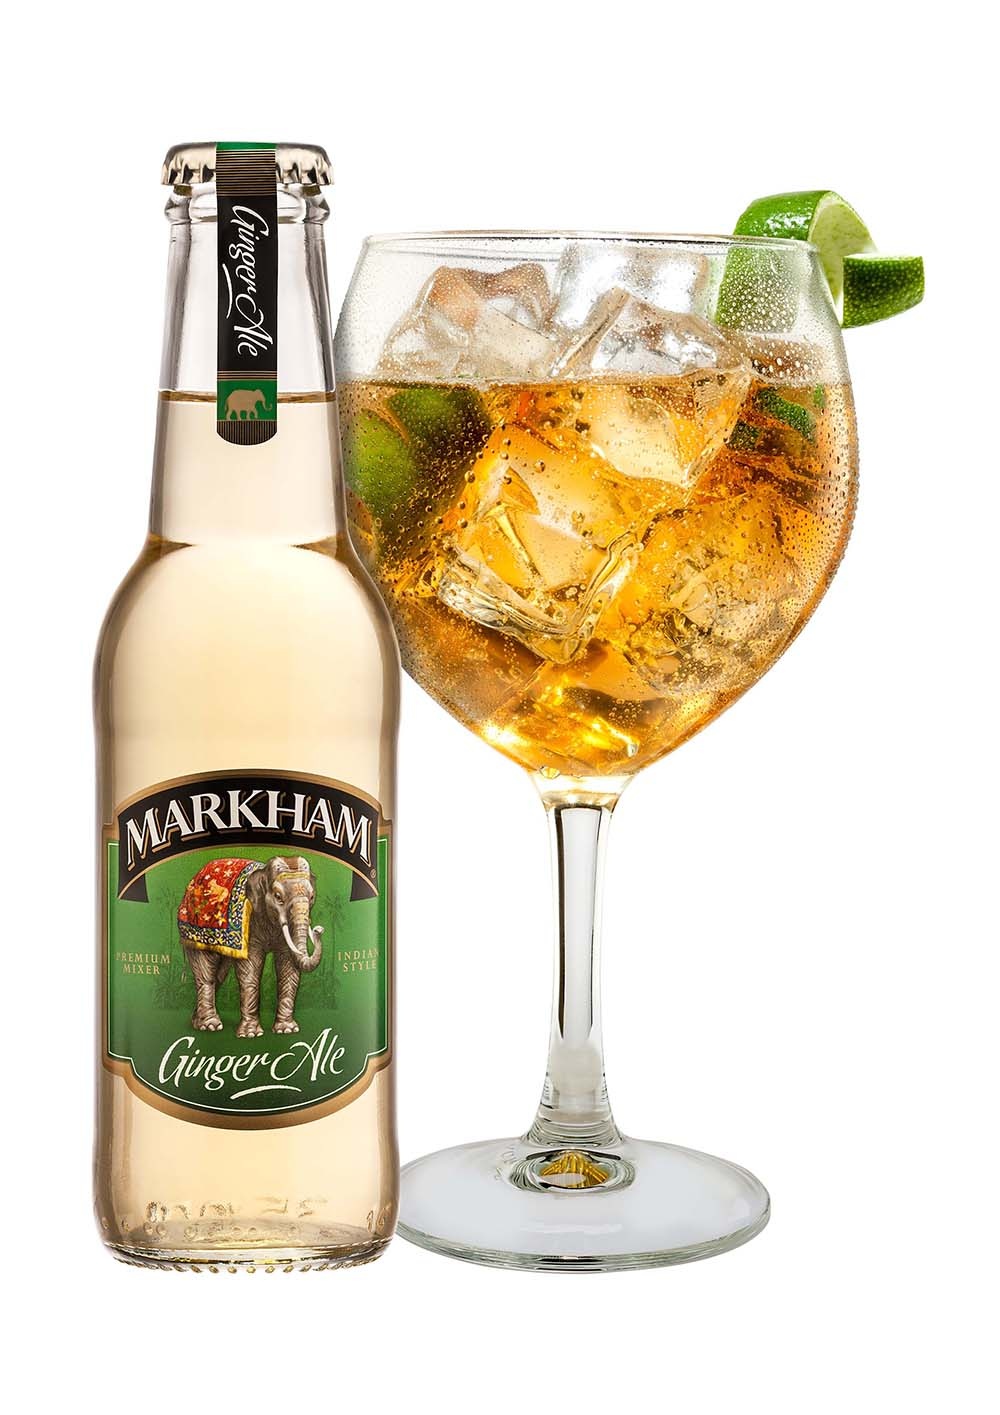 Nuevo ginger ale de Markham